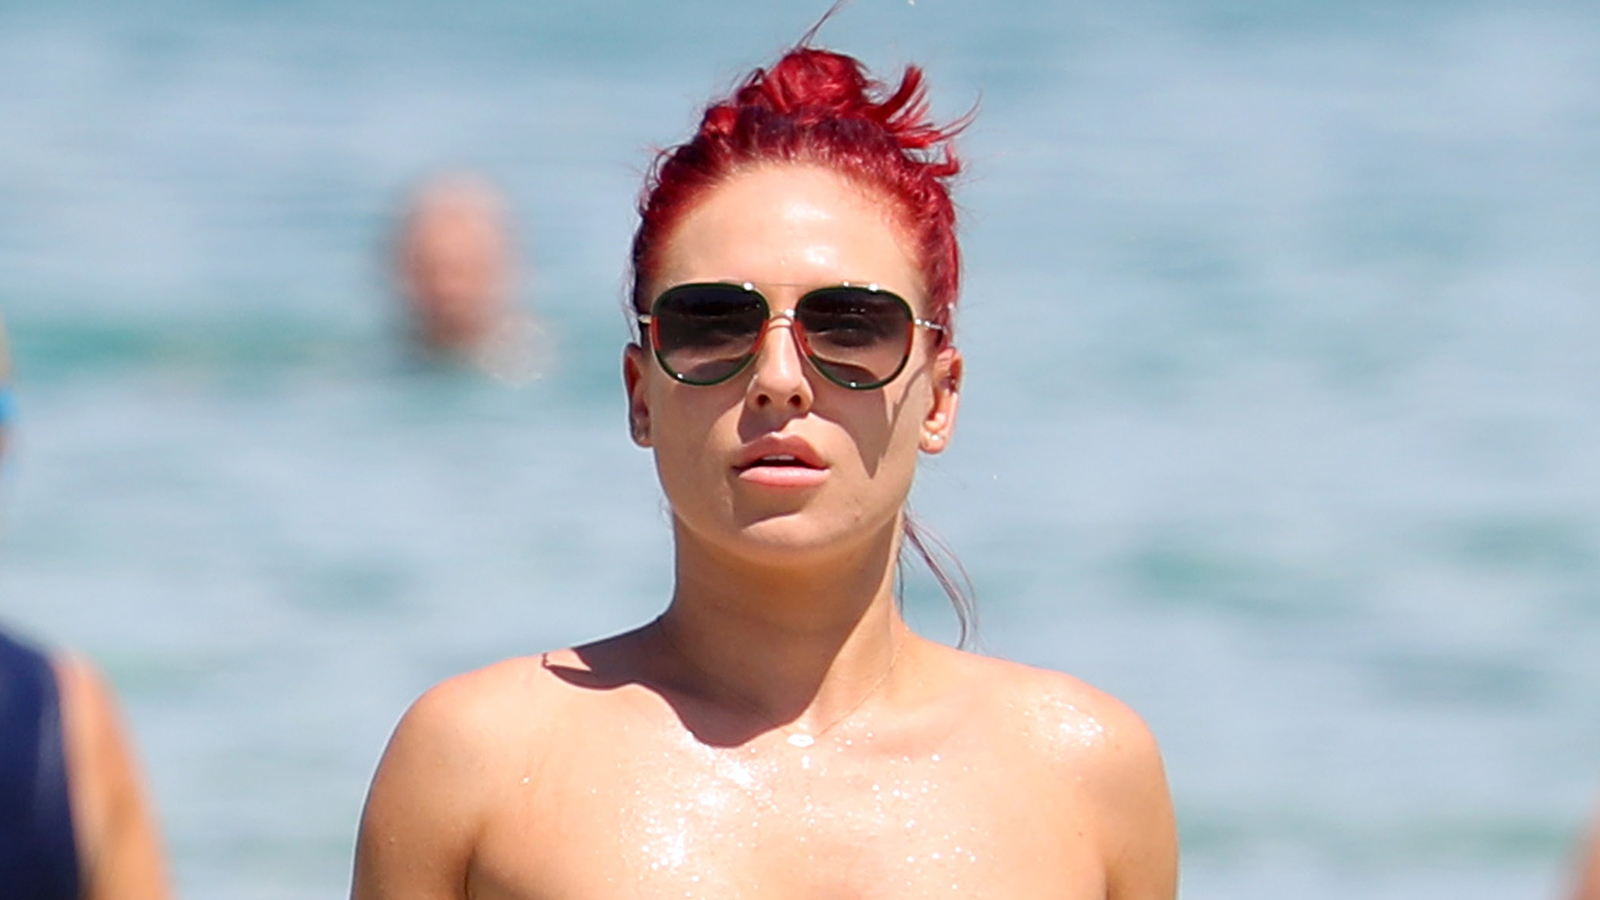 DWTS' Sharna Burgess Looks Ripped in a Bikini on the Beach